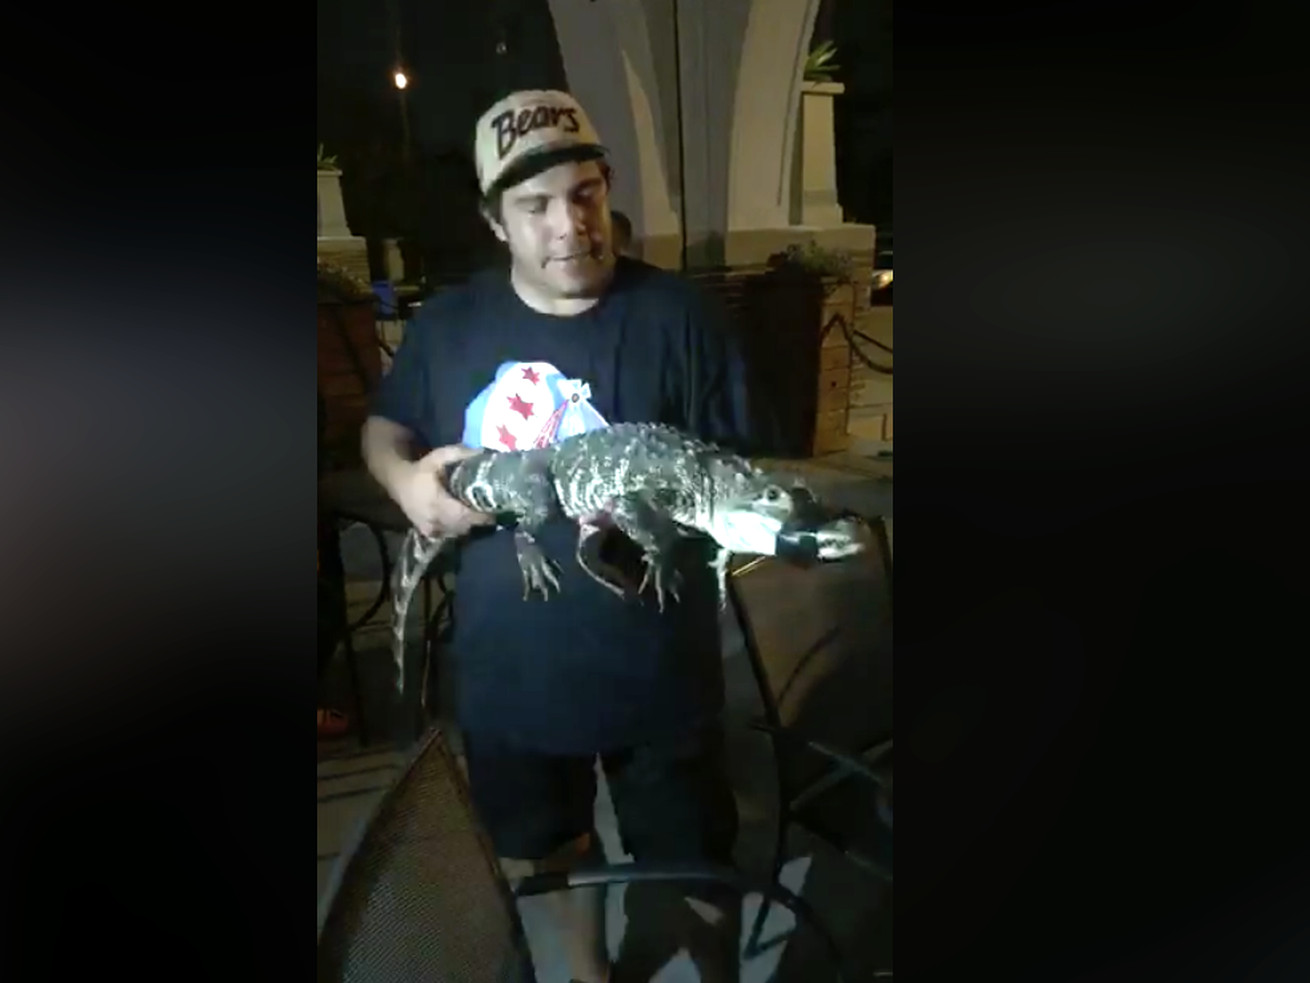 Man says he caught alligator in Humboldt Park